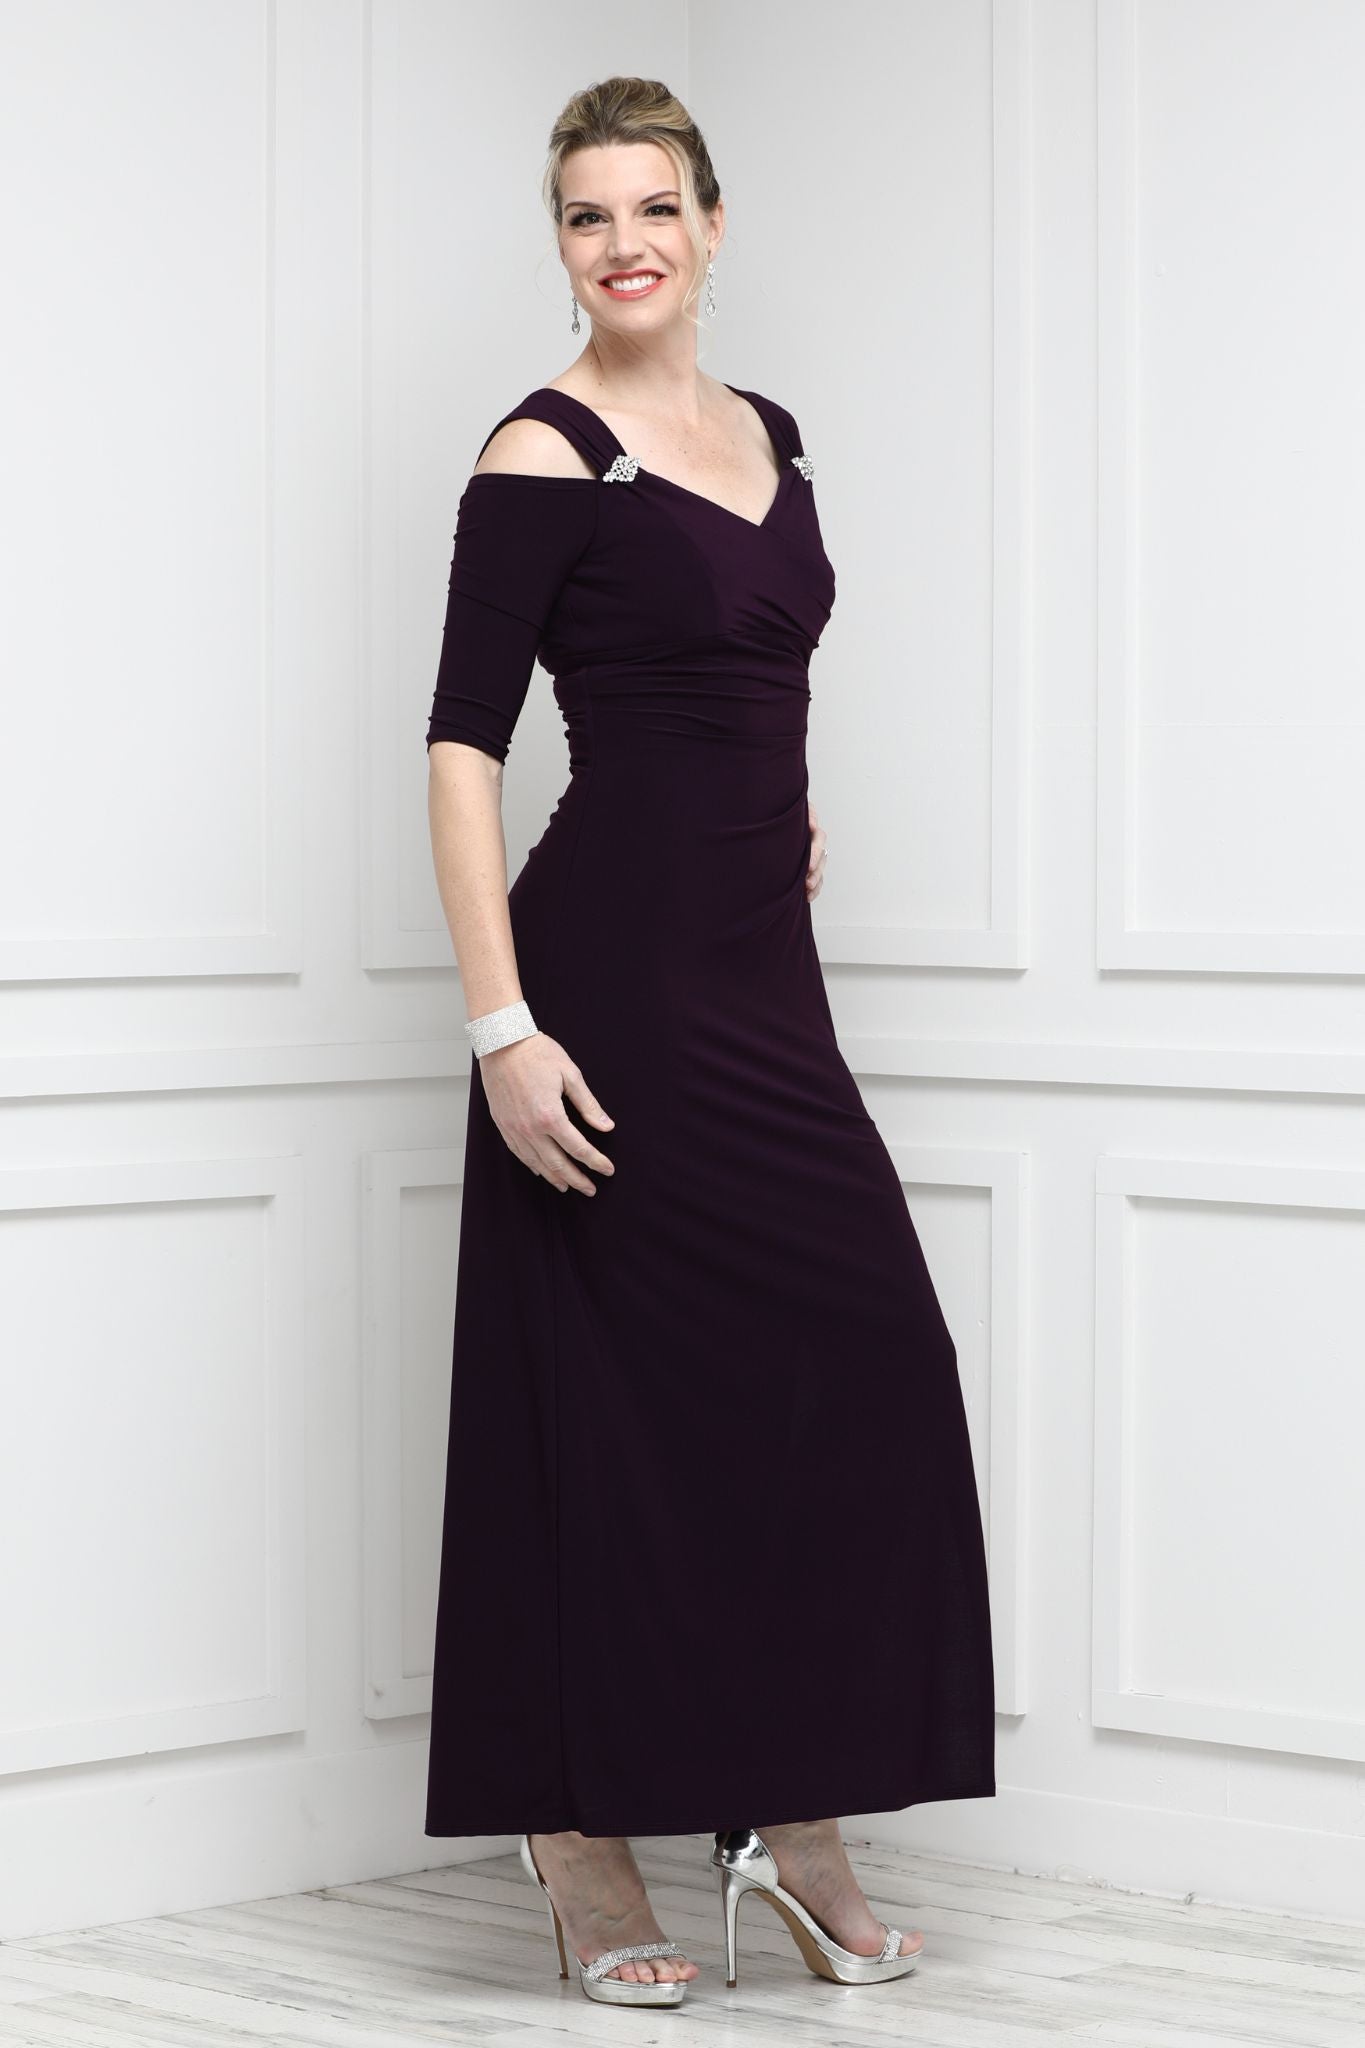 Classic Regency Era Black Lace Dress - Empire Waist Ball Gown Plus Siz –  WonderlandByLilian